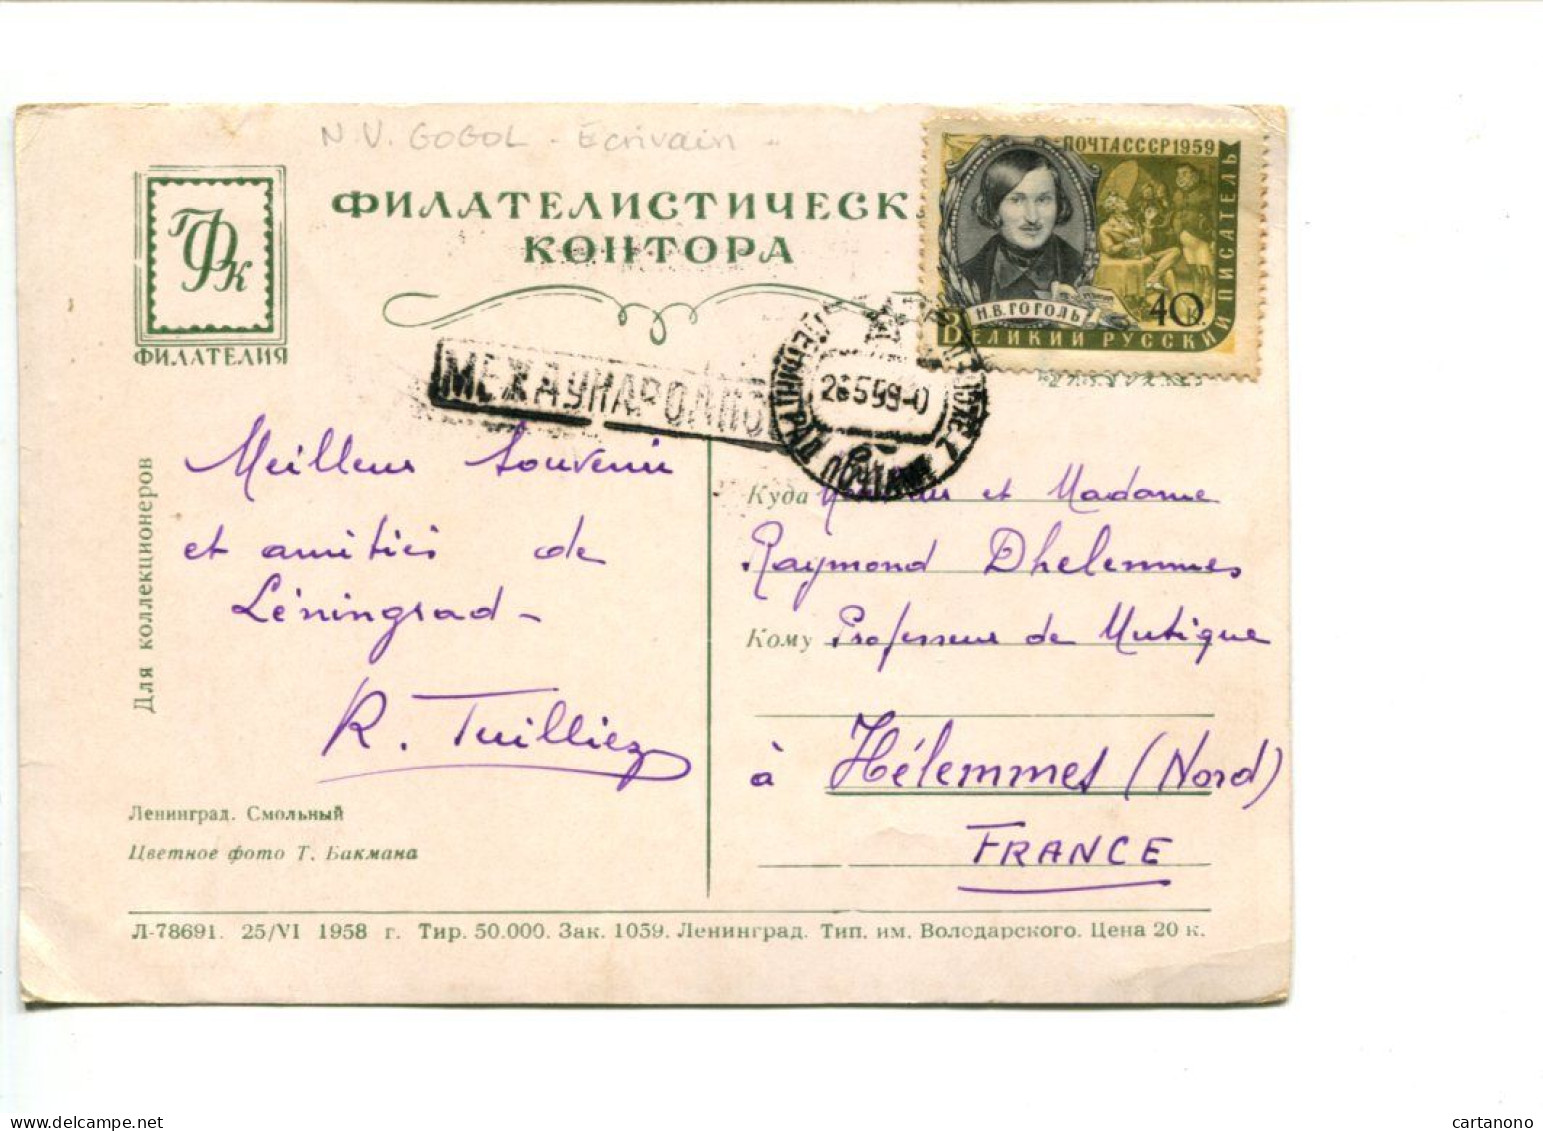 URSS - Affranchissement Sur Carte Postale - Ecrivain N.V. GOGOL - Briefe U. Dokumente